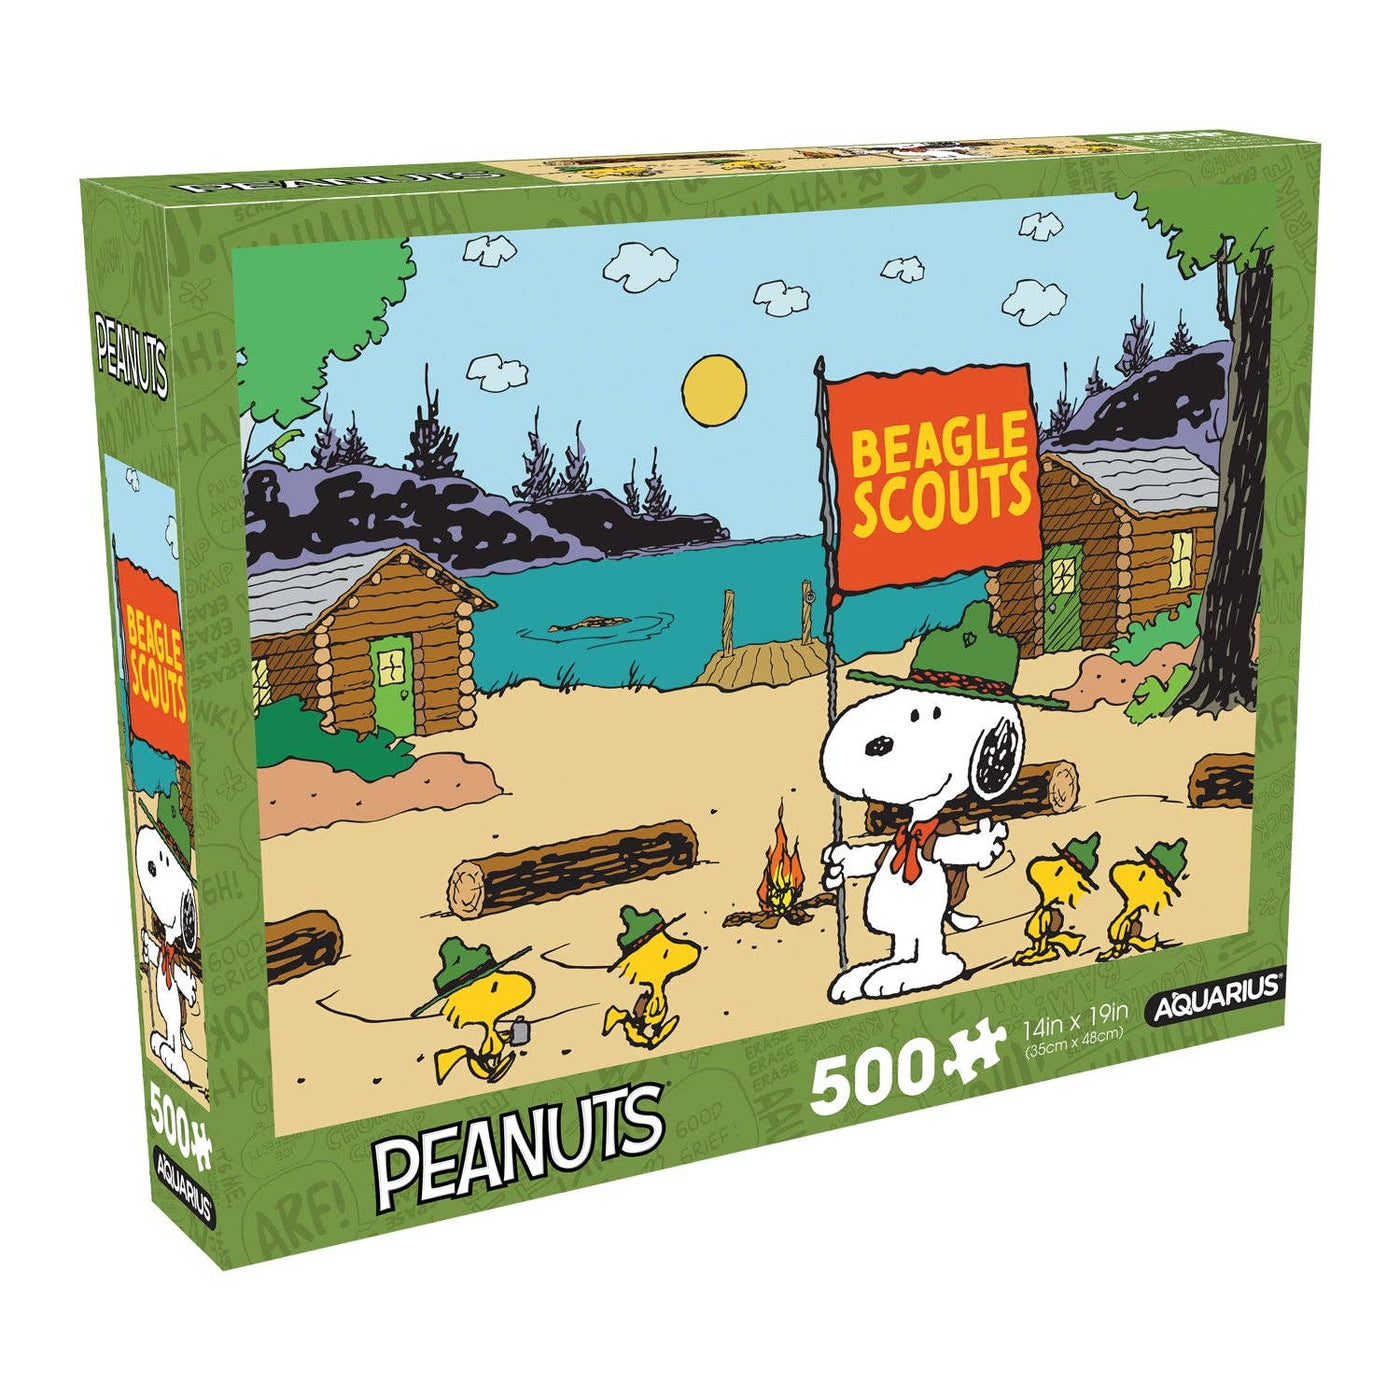 Peanuts Beagle Scouts 500 Piece Jigsaw Puzzle